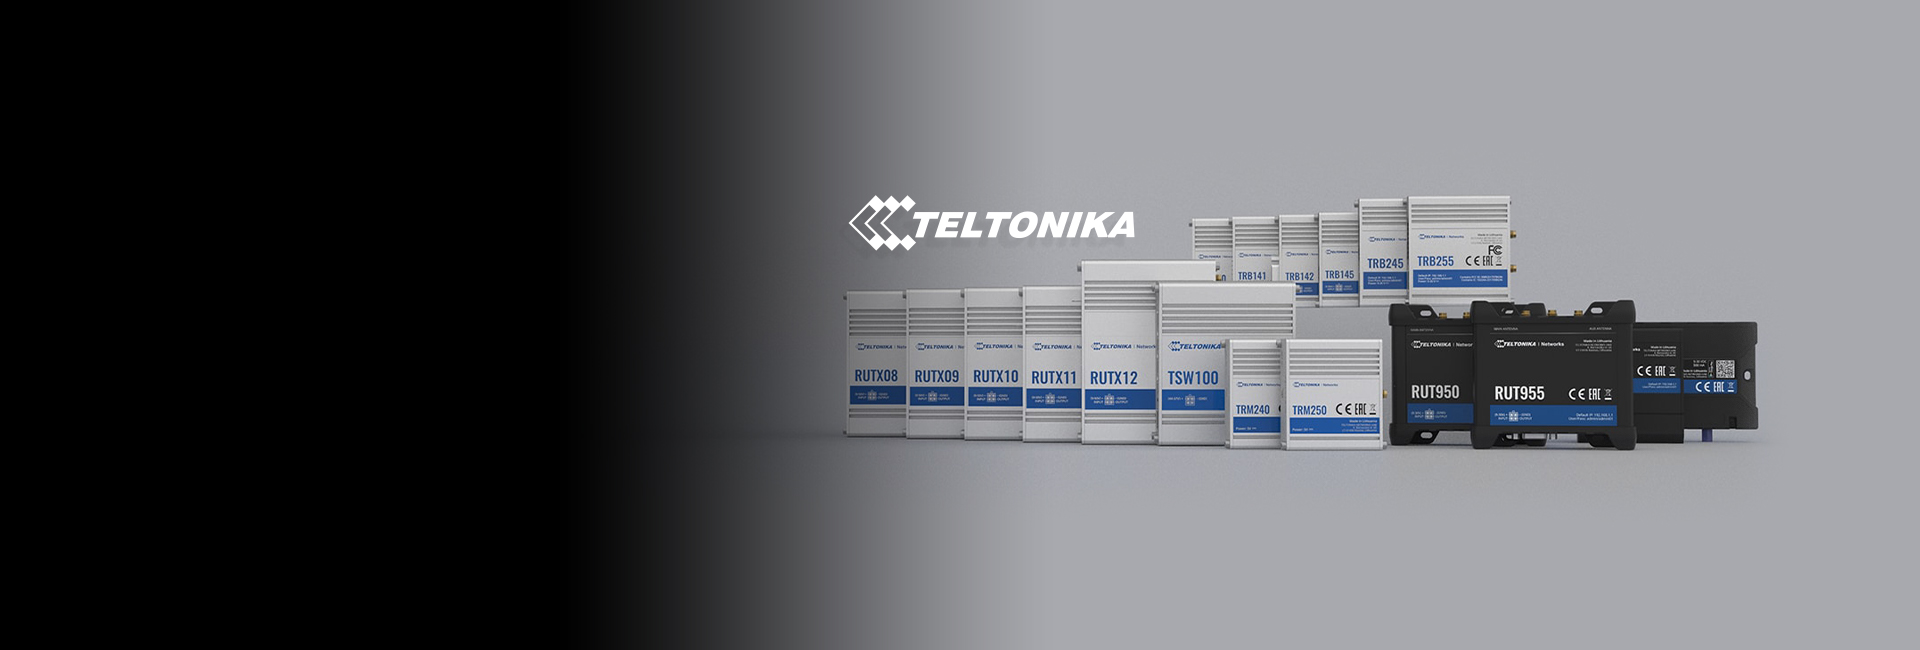 Teltonika<br>Use Cases